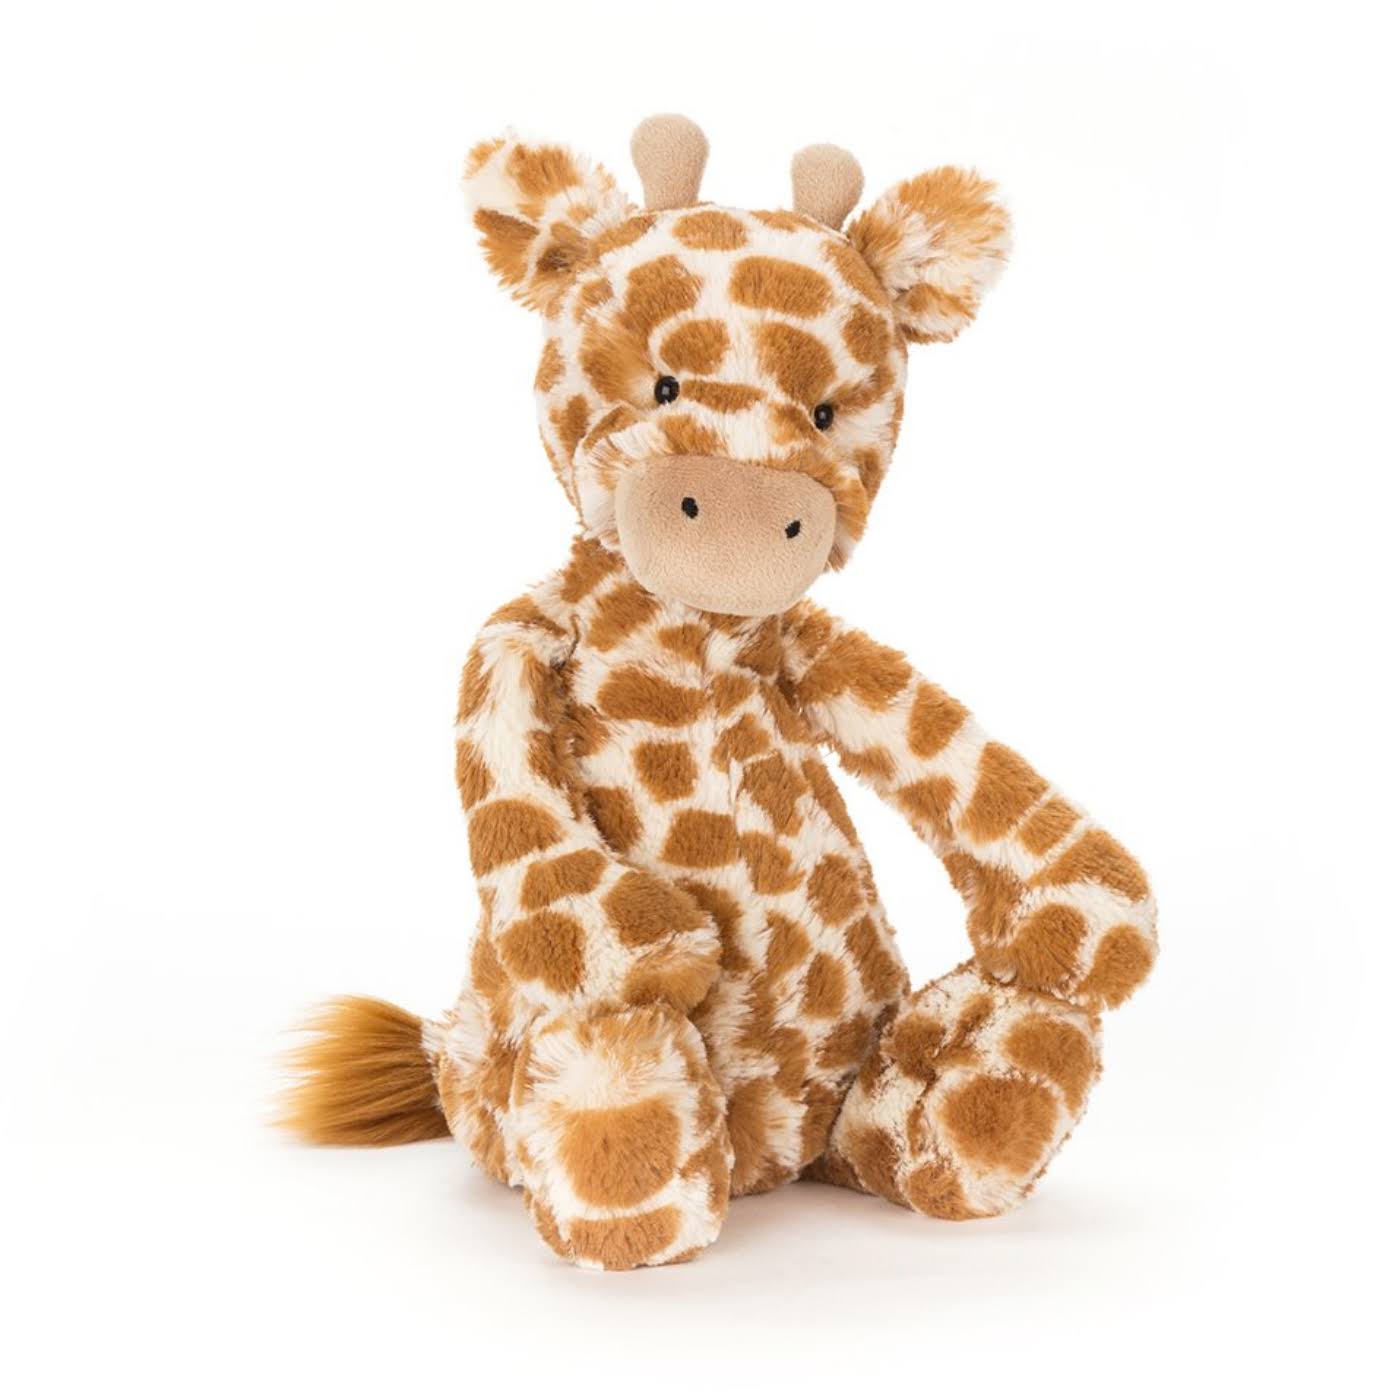 Jellycat Bashful Giraffe Plush Toy - Medium, 31cm